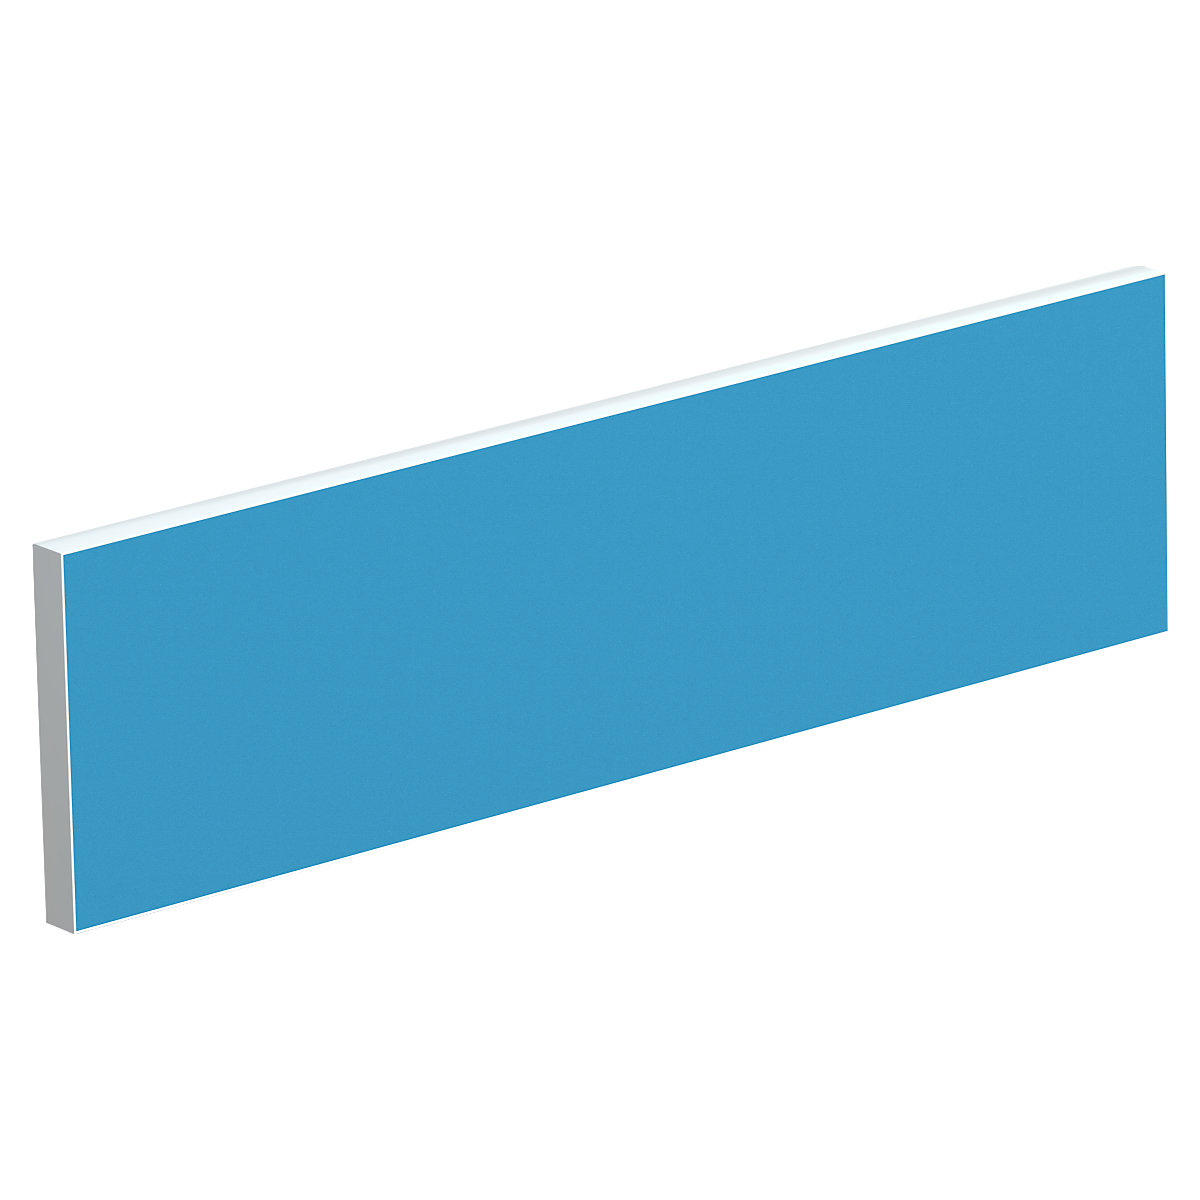 Table partition for team desks, width 1200 mm, blue cover-9